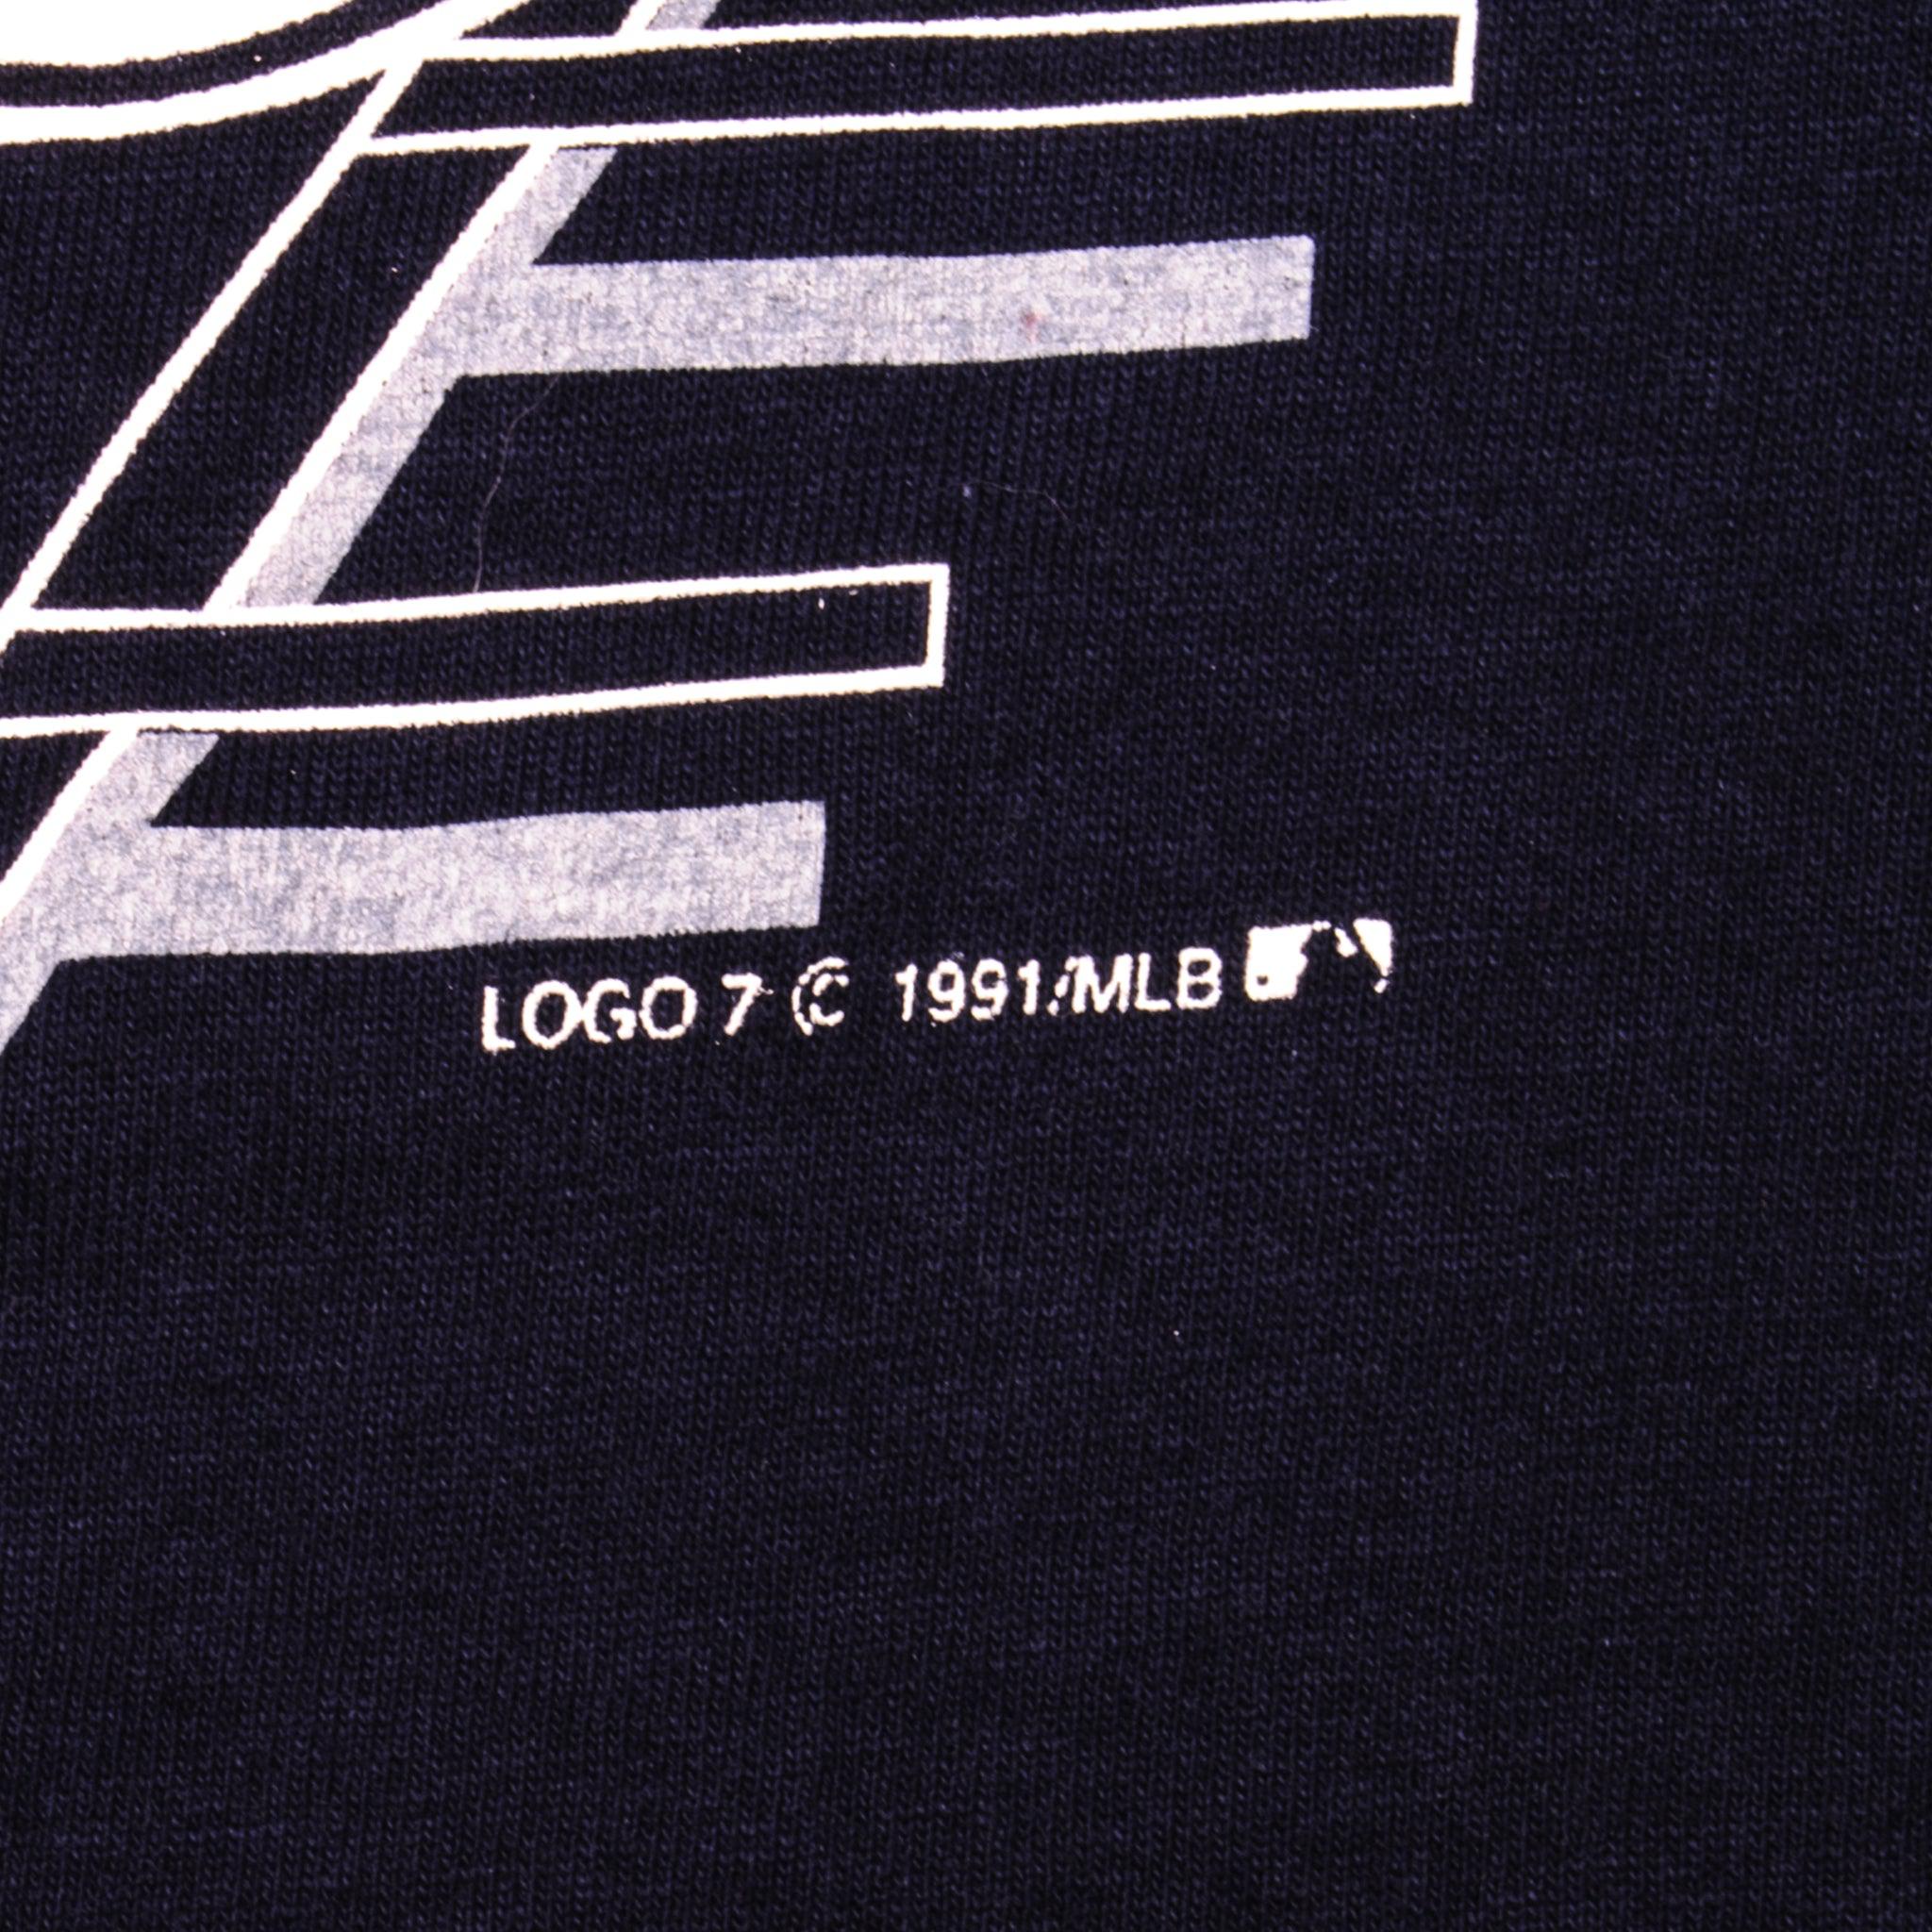 Buy Vintage 1989 California Angels T-shirt by Logo7 MLB Baseball Online in  India 